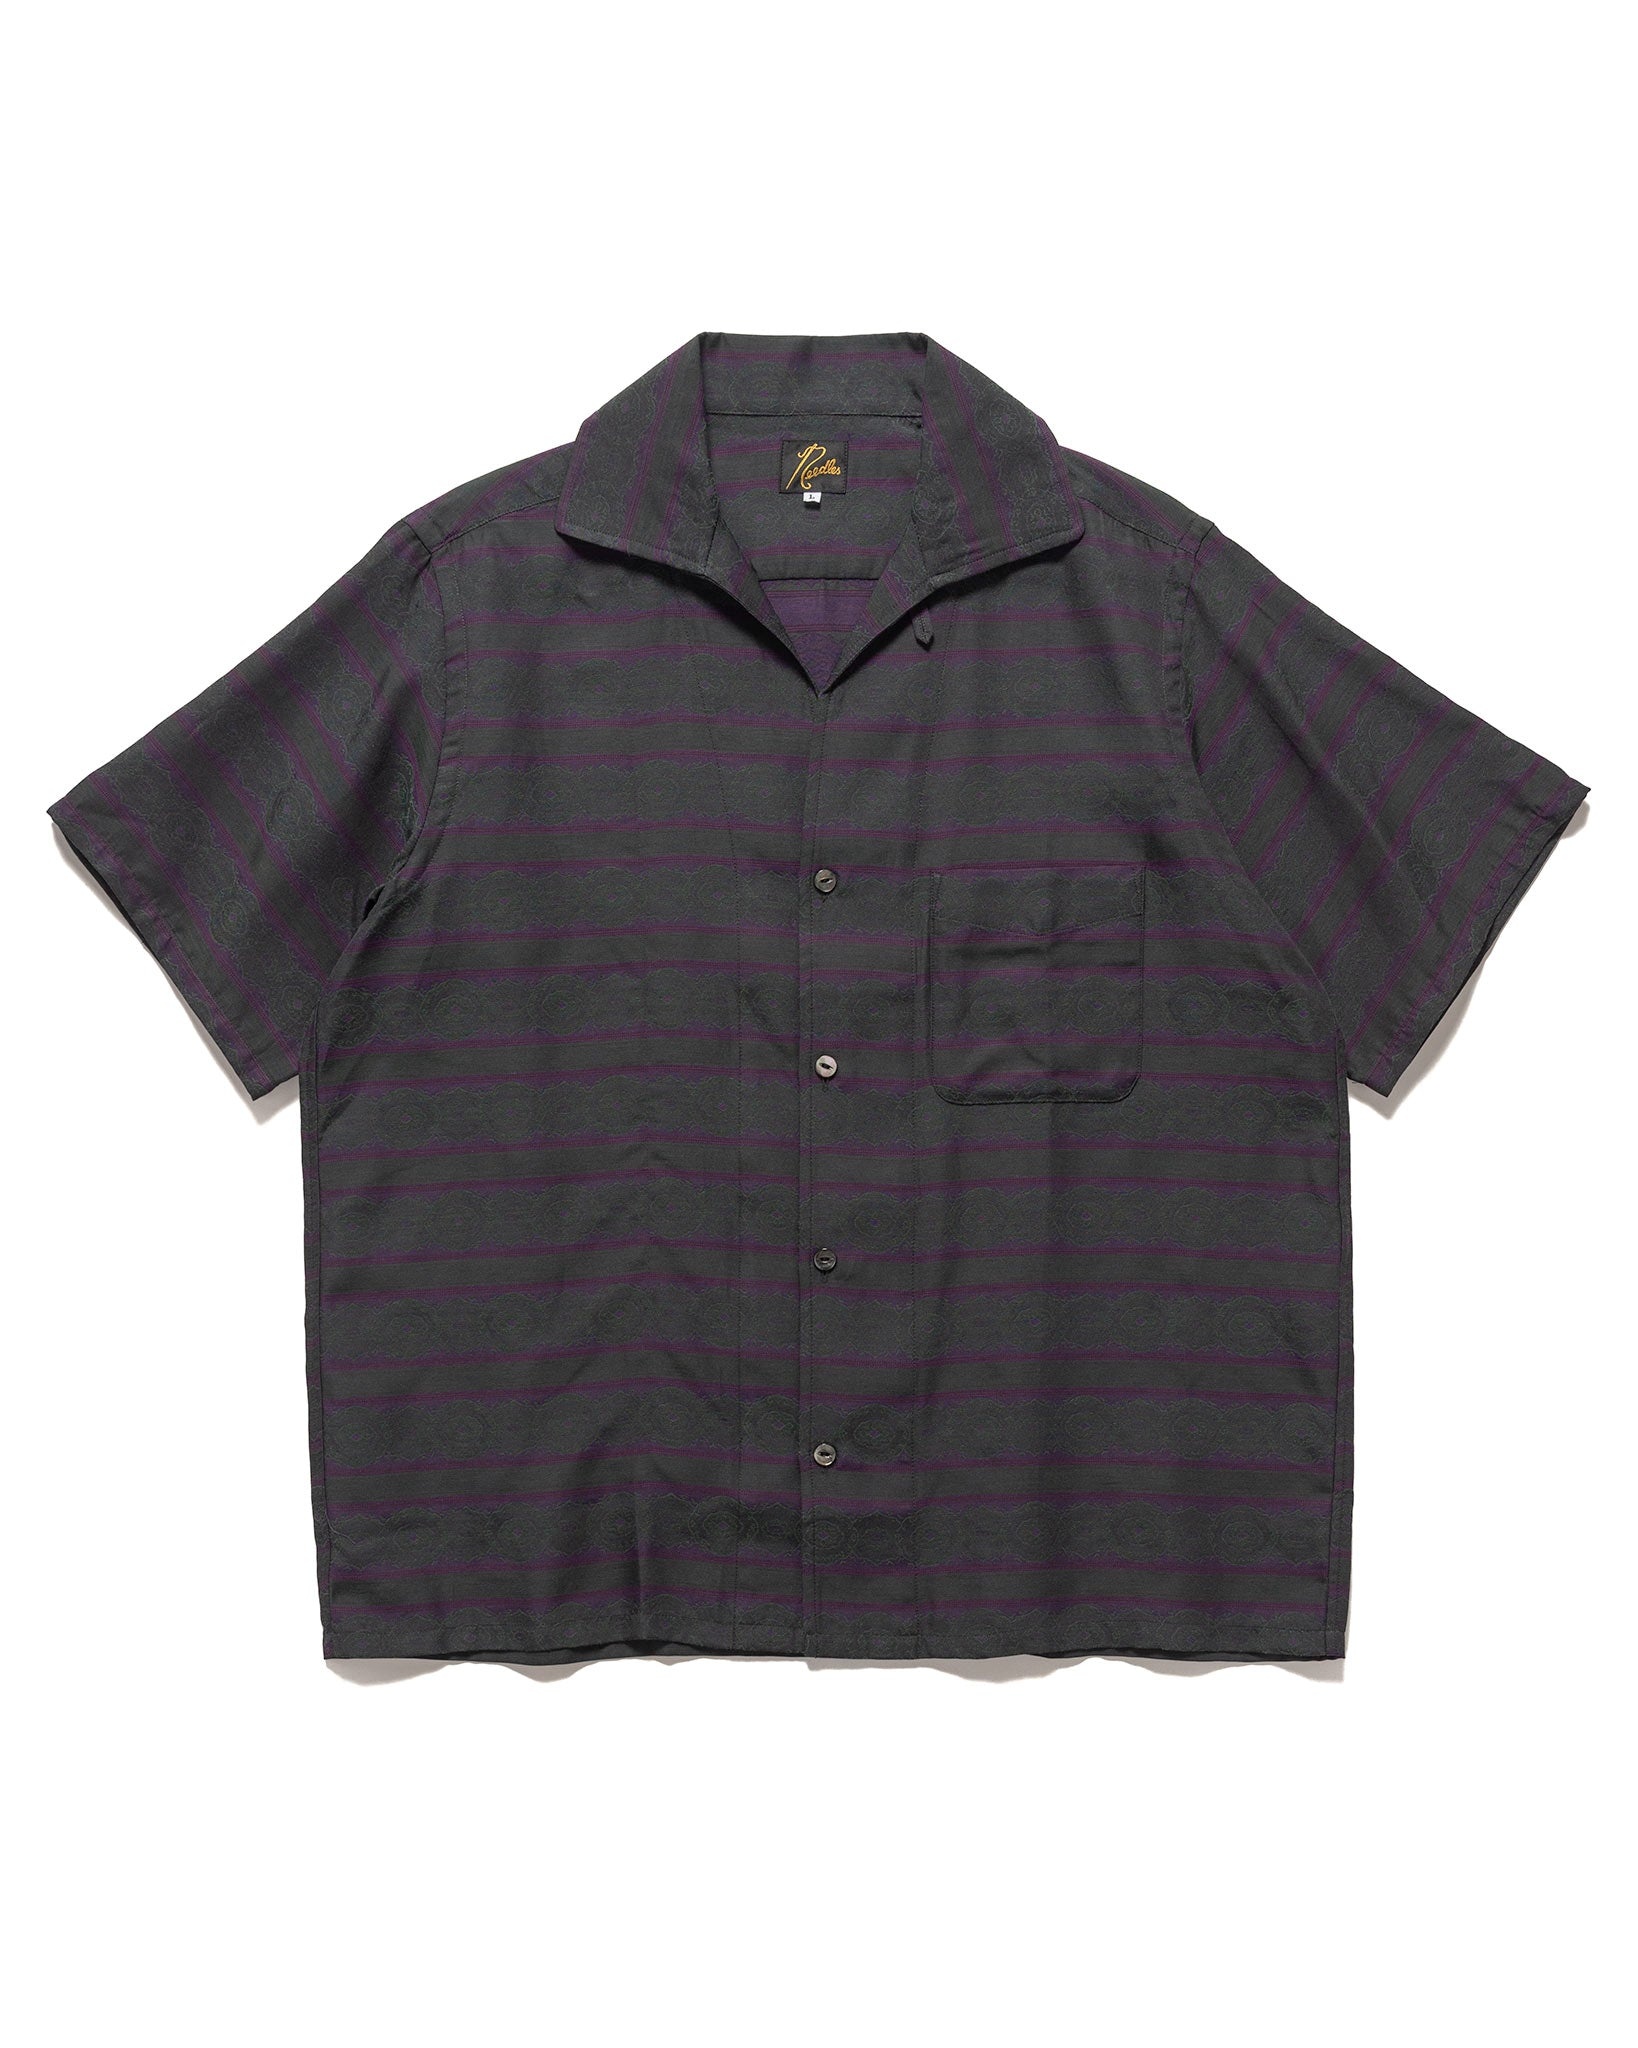 S/S Italian Collar Shirt - PE/C Fine Pattern Stripe Jq. Green - 1